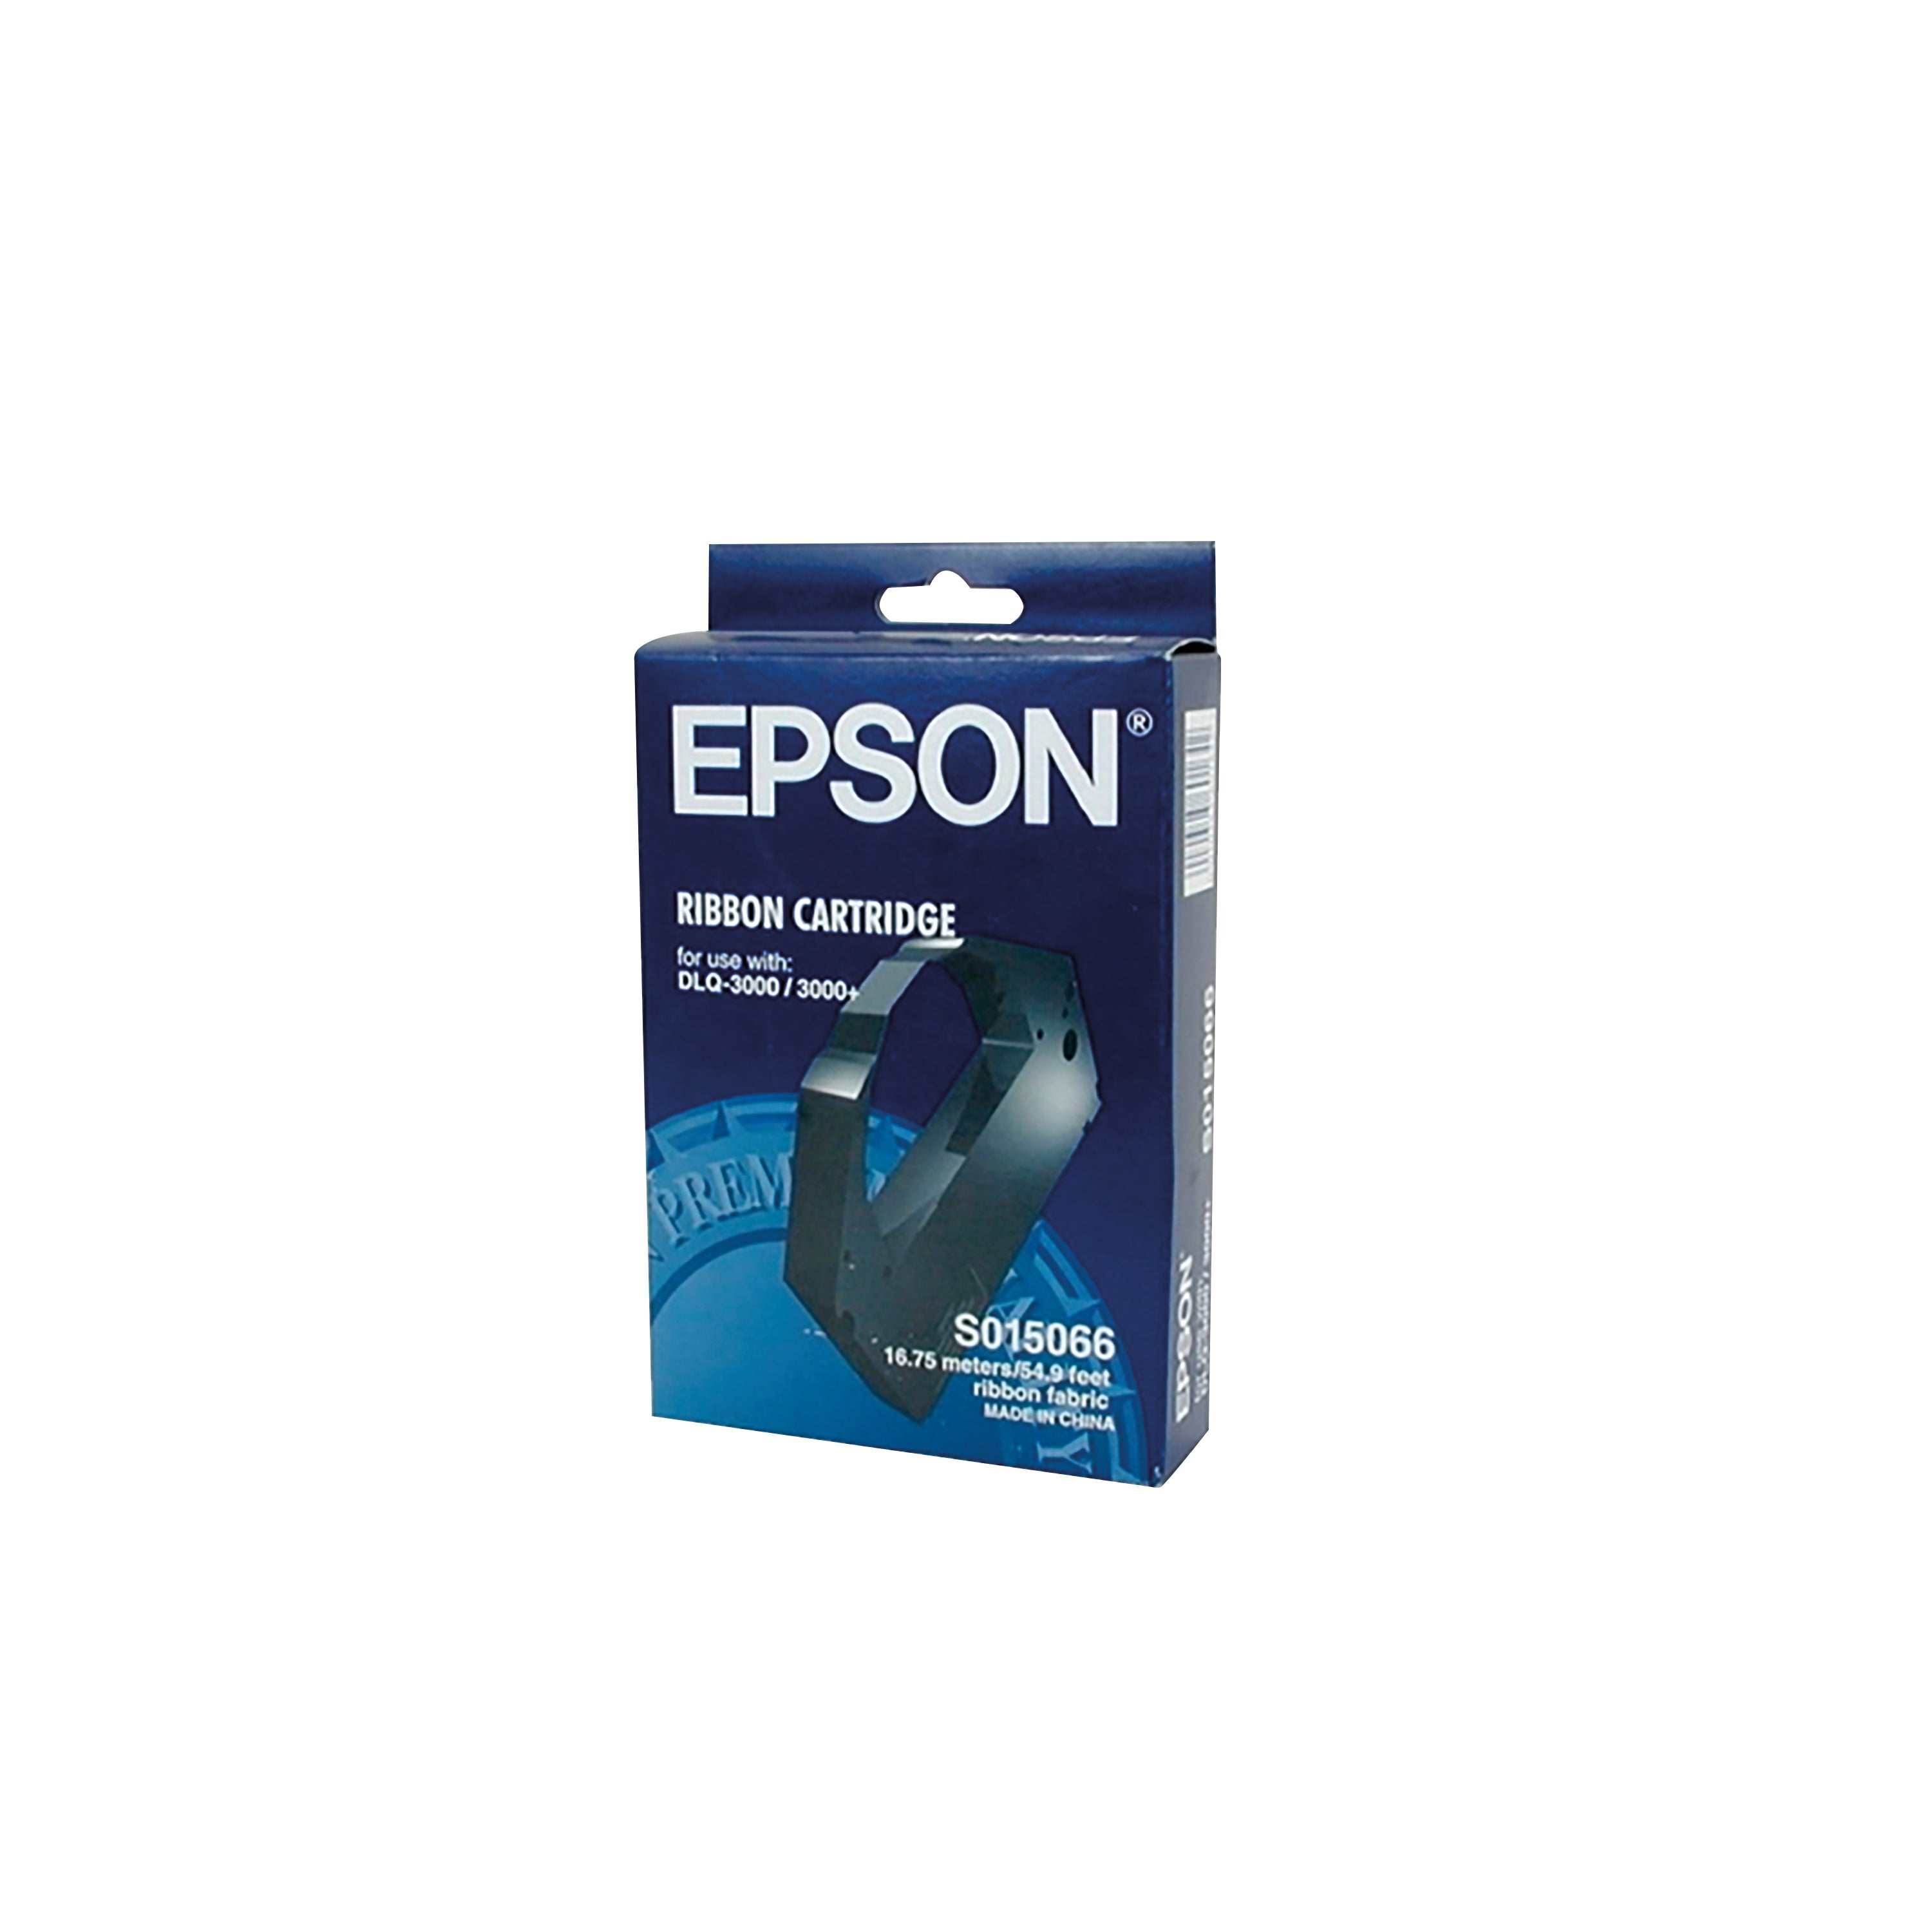 Epson SIDM Ribbon Cartridge For DLQ-3000/Plus/3500 Black C13S015066